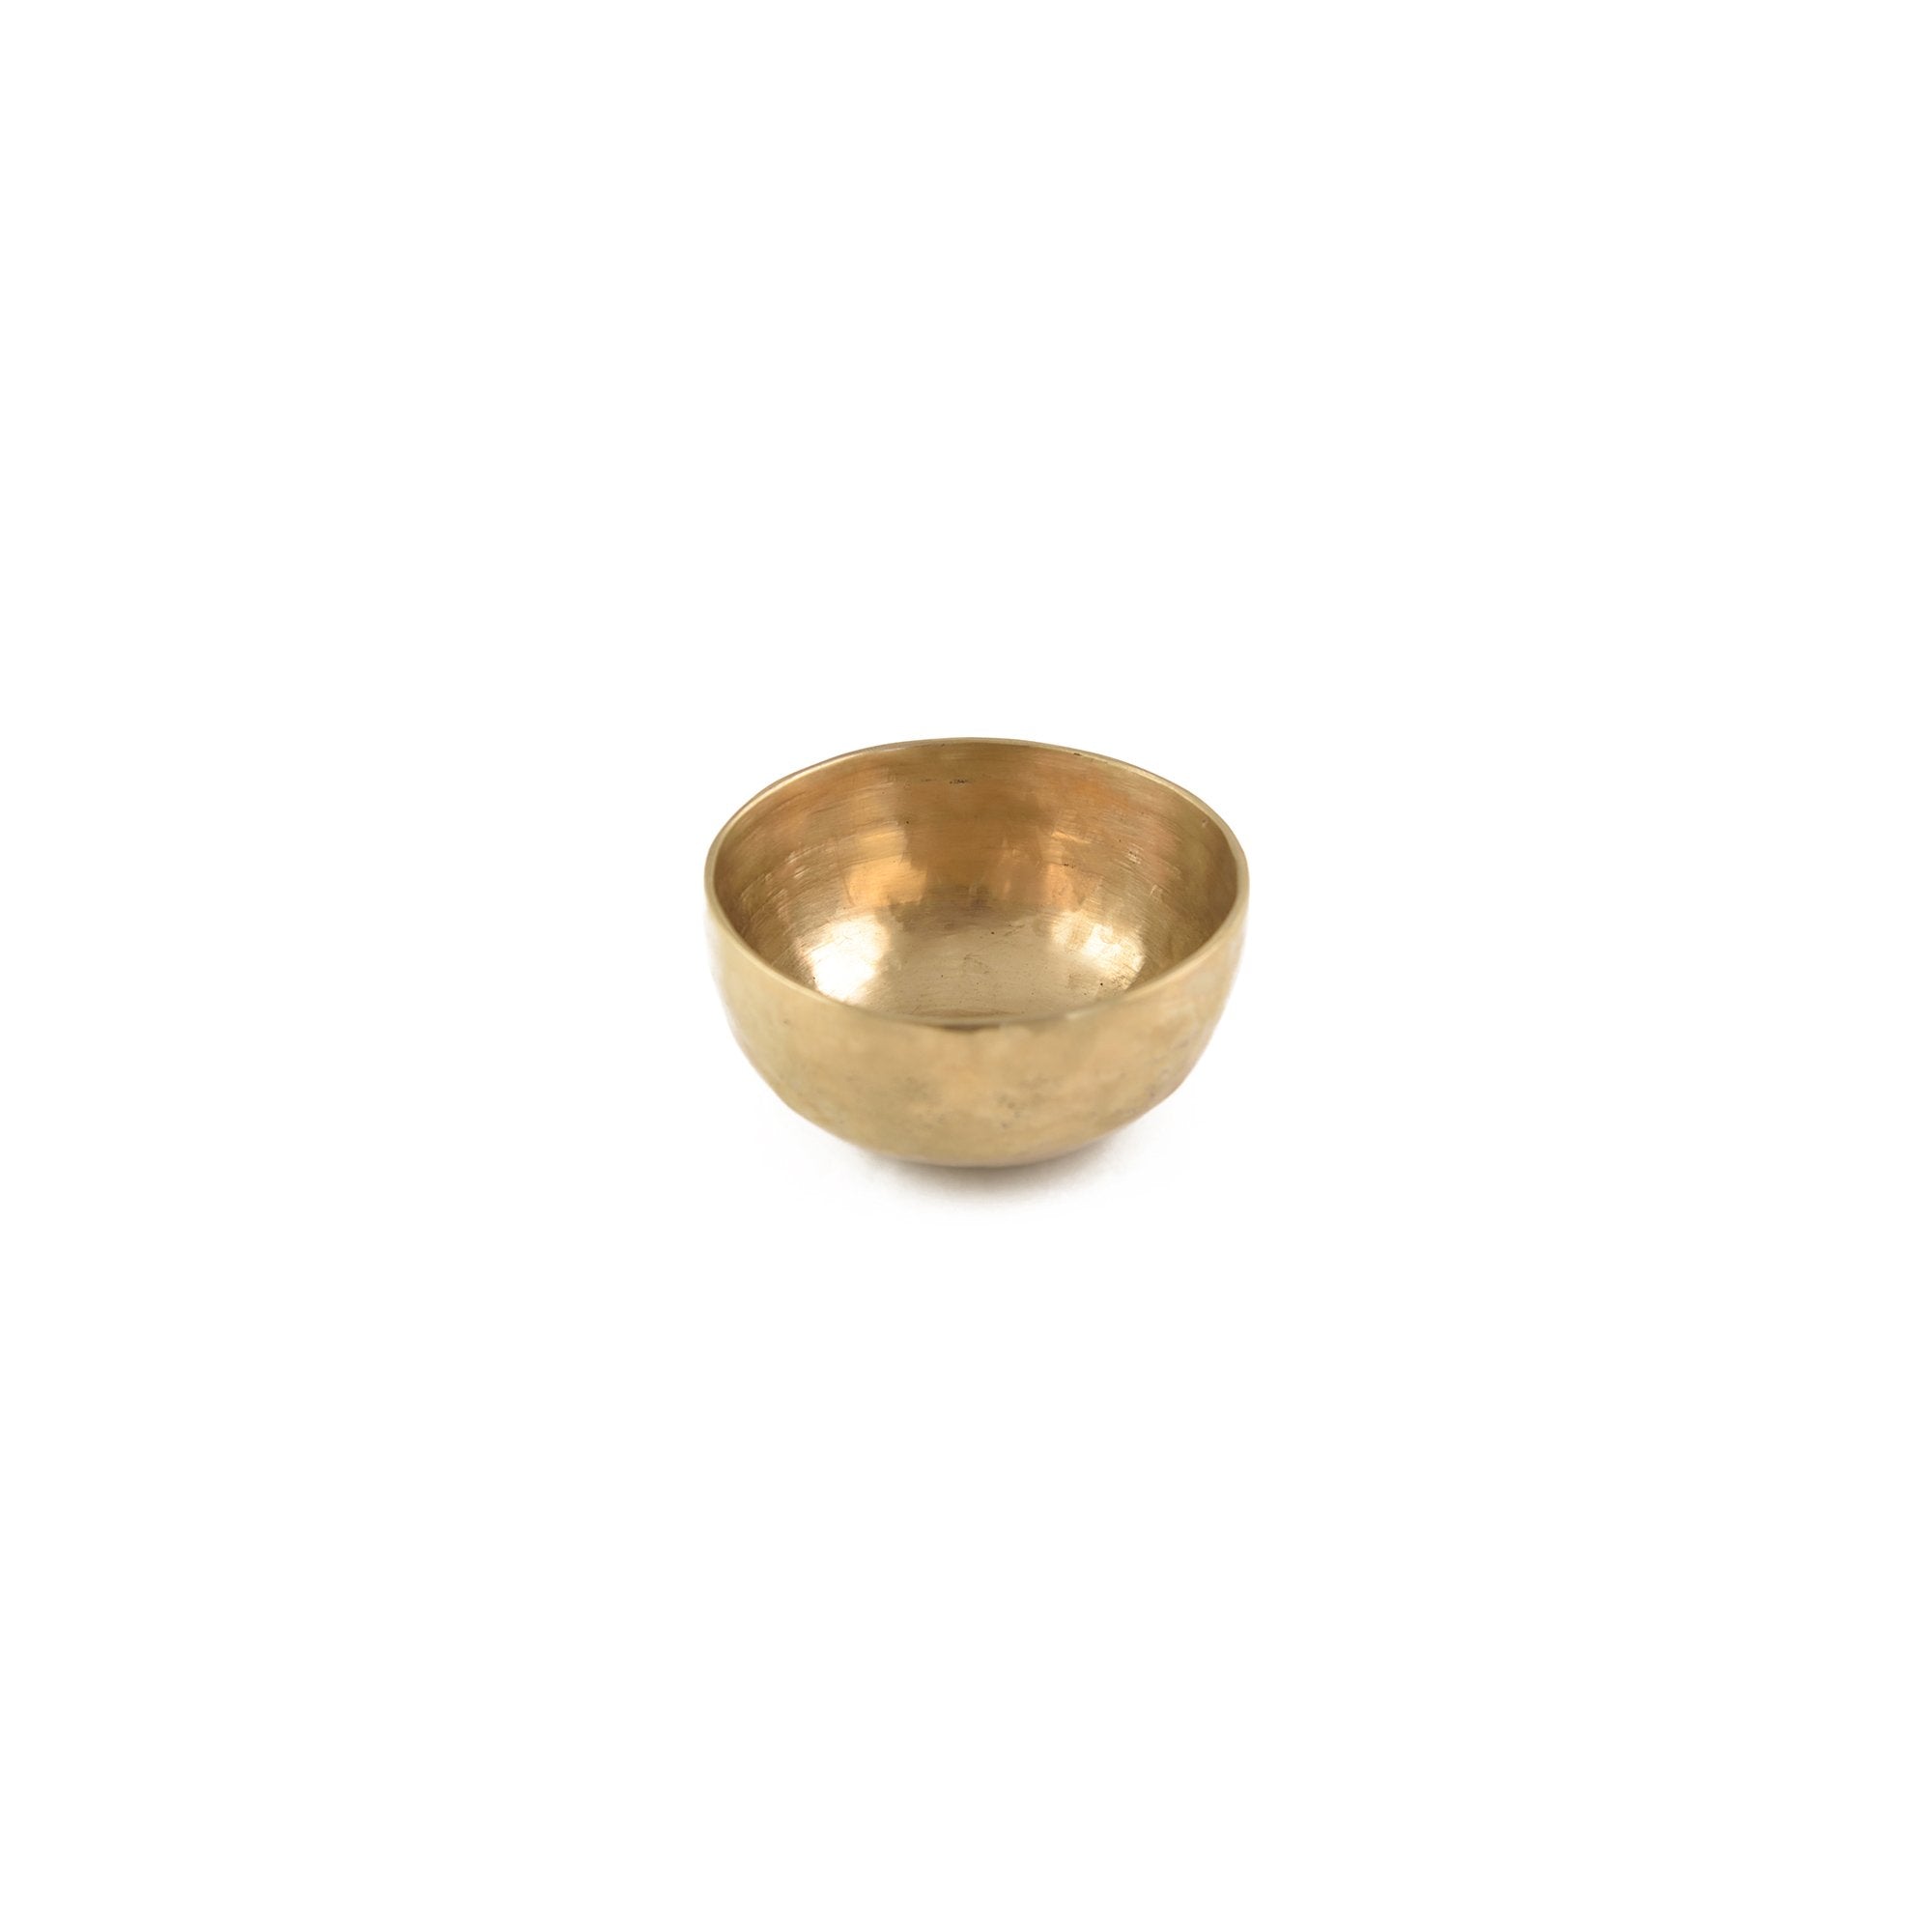 Tibetan Singing Bowl (Small) 400-529 gm